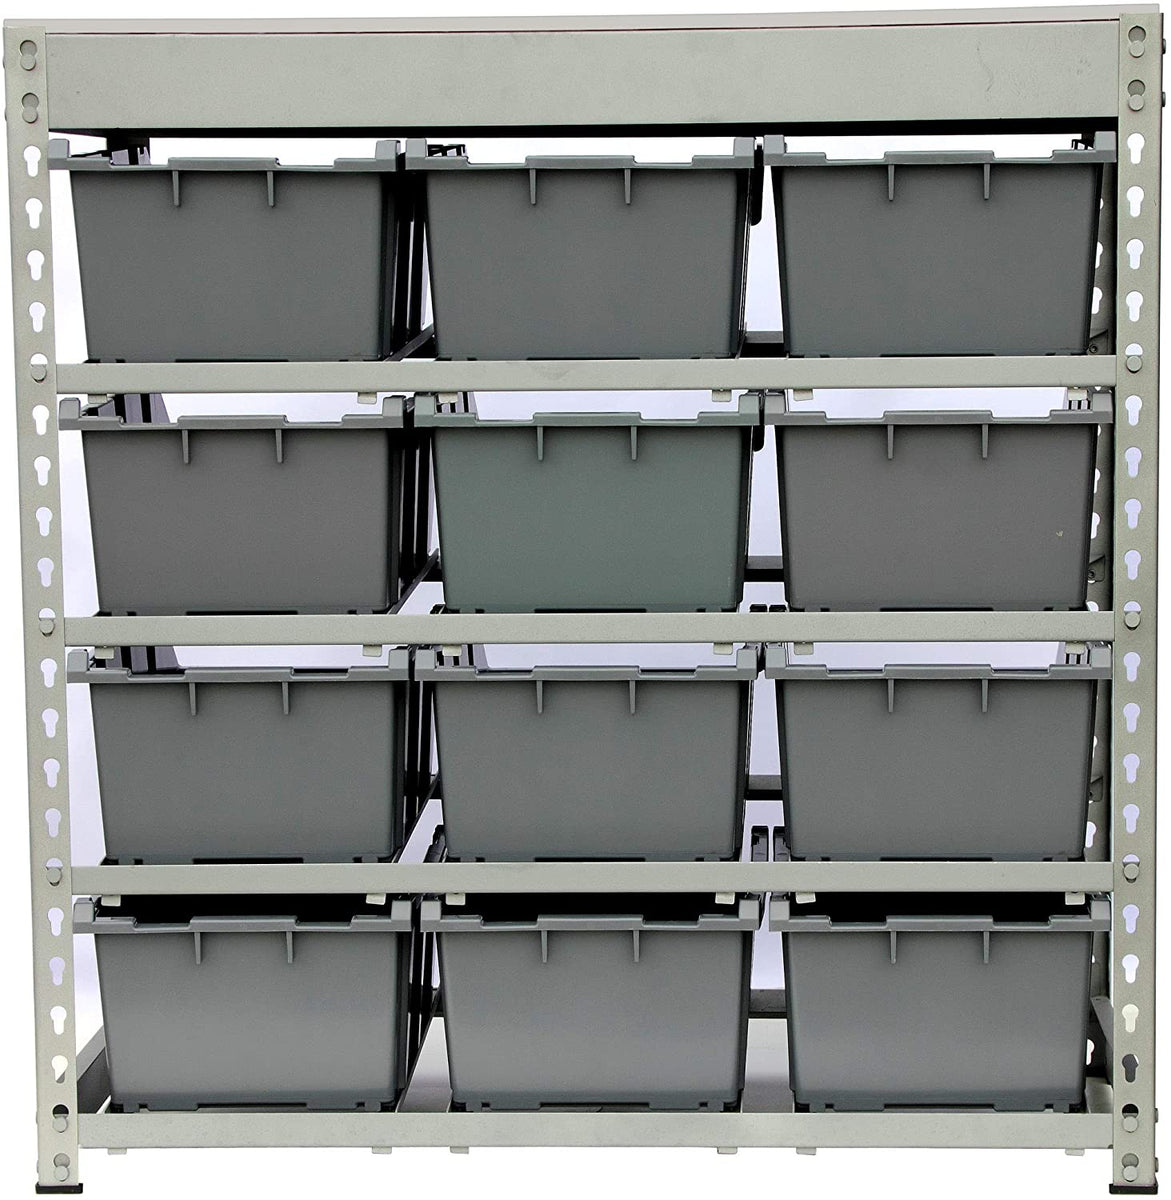 KING'S RACK Bin Rack Boltless Steel Storage System Organizer w/ 12 Plastic  Bins in 4 tiers